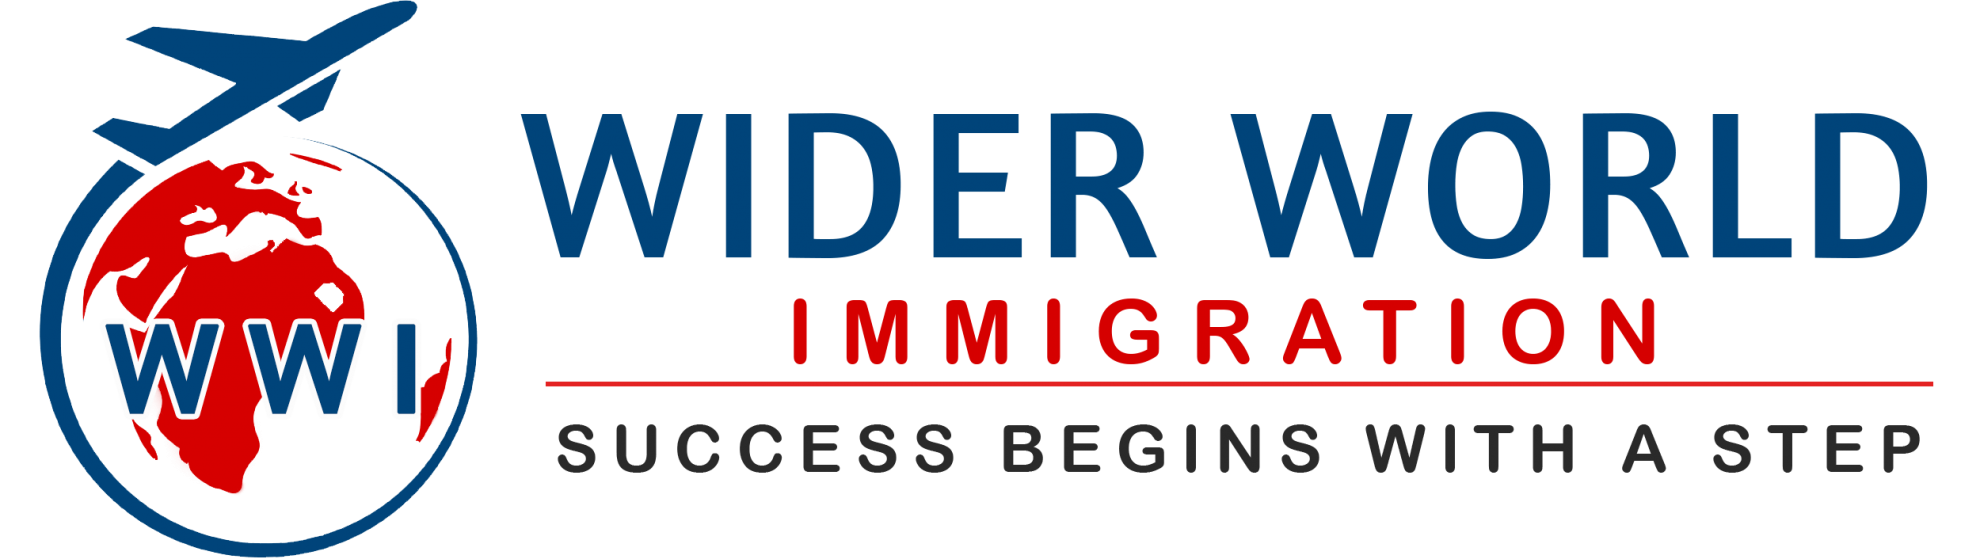 Wider World Immigration